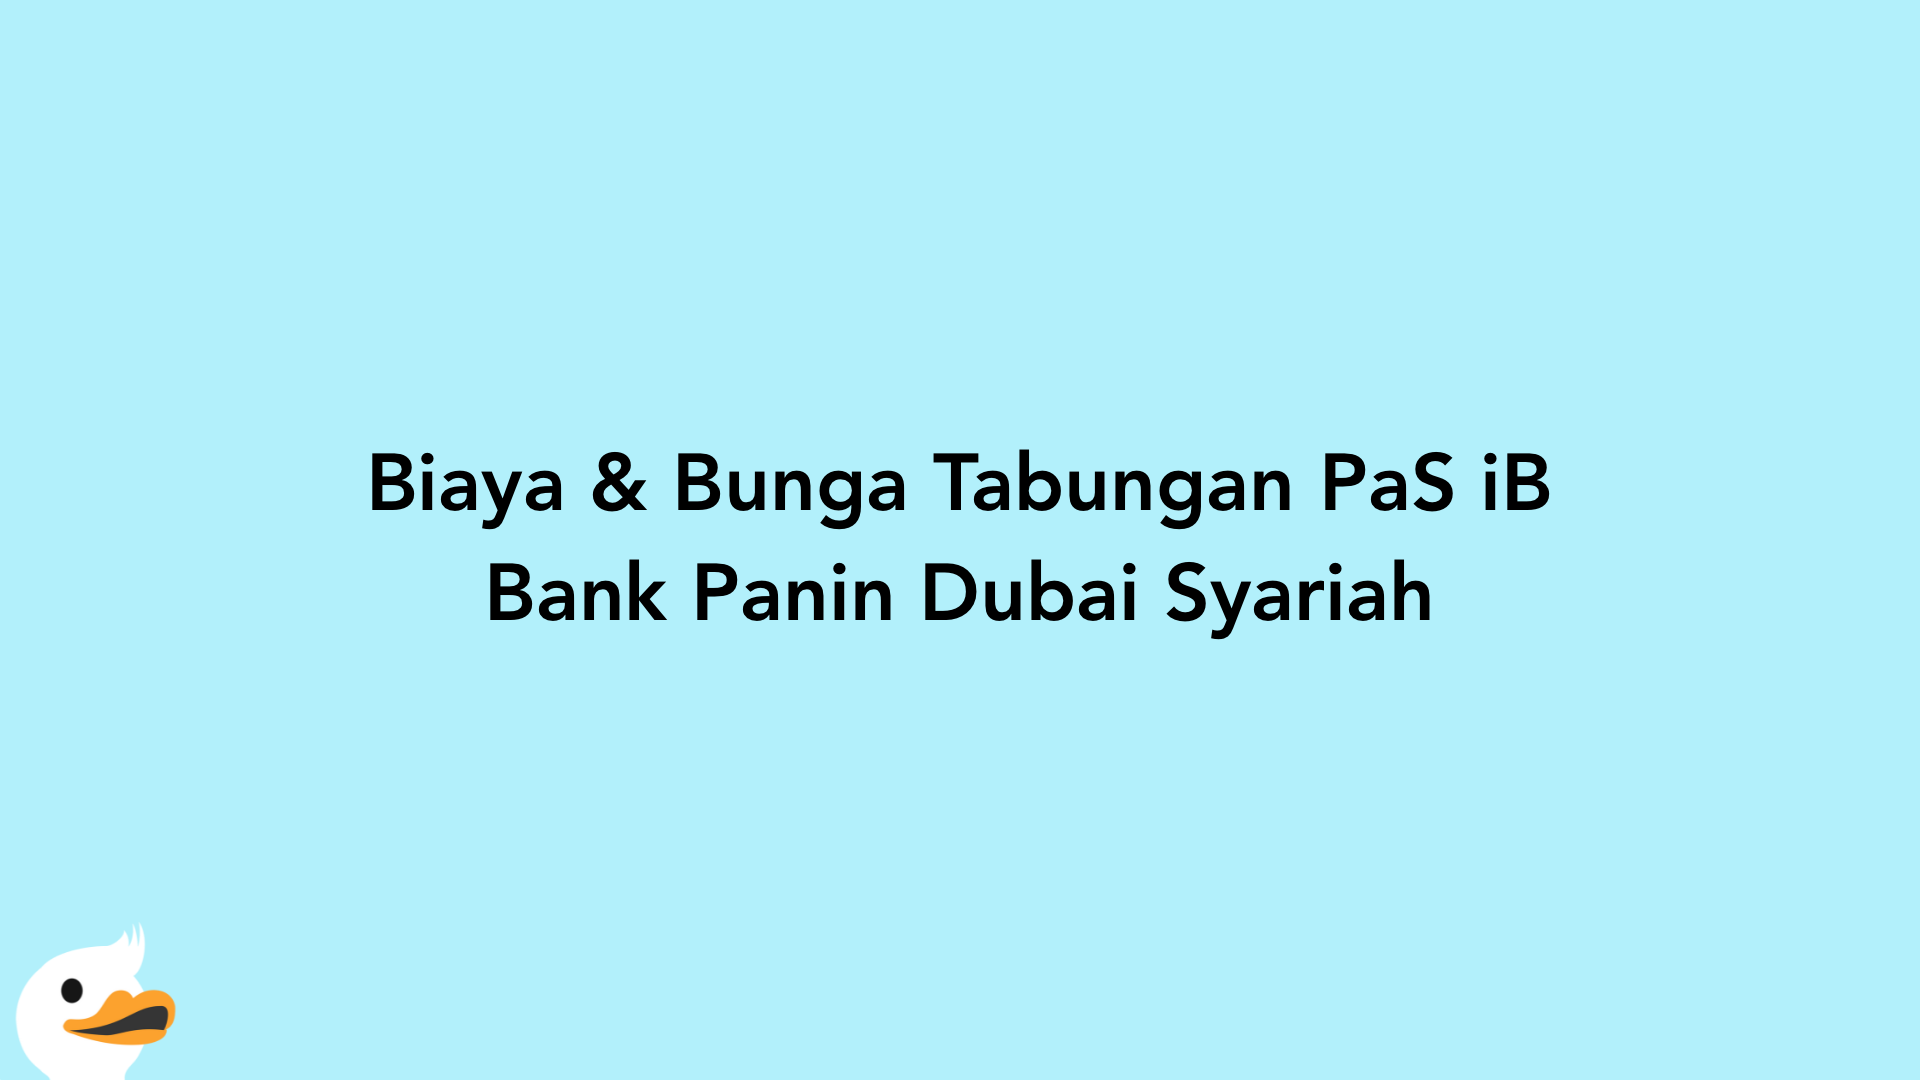 Biaya & Bunga Tabungan PaS iB Bank Panin Dubai Syariah